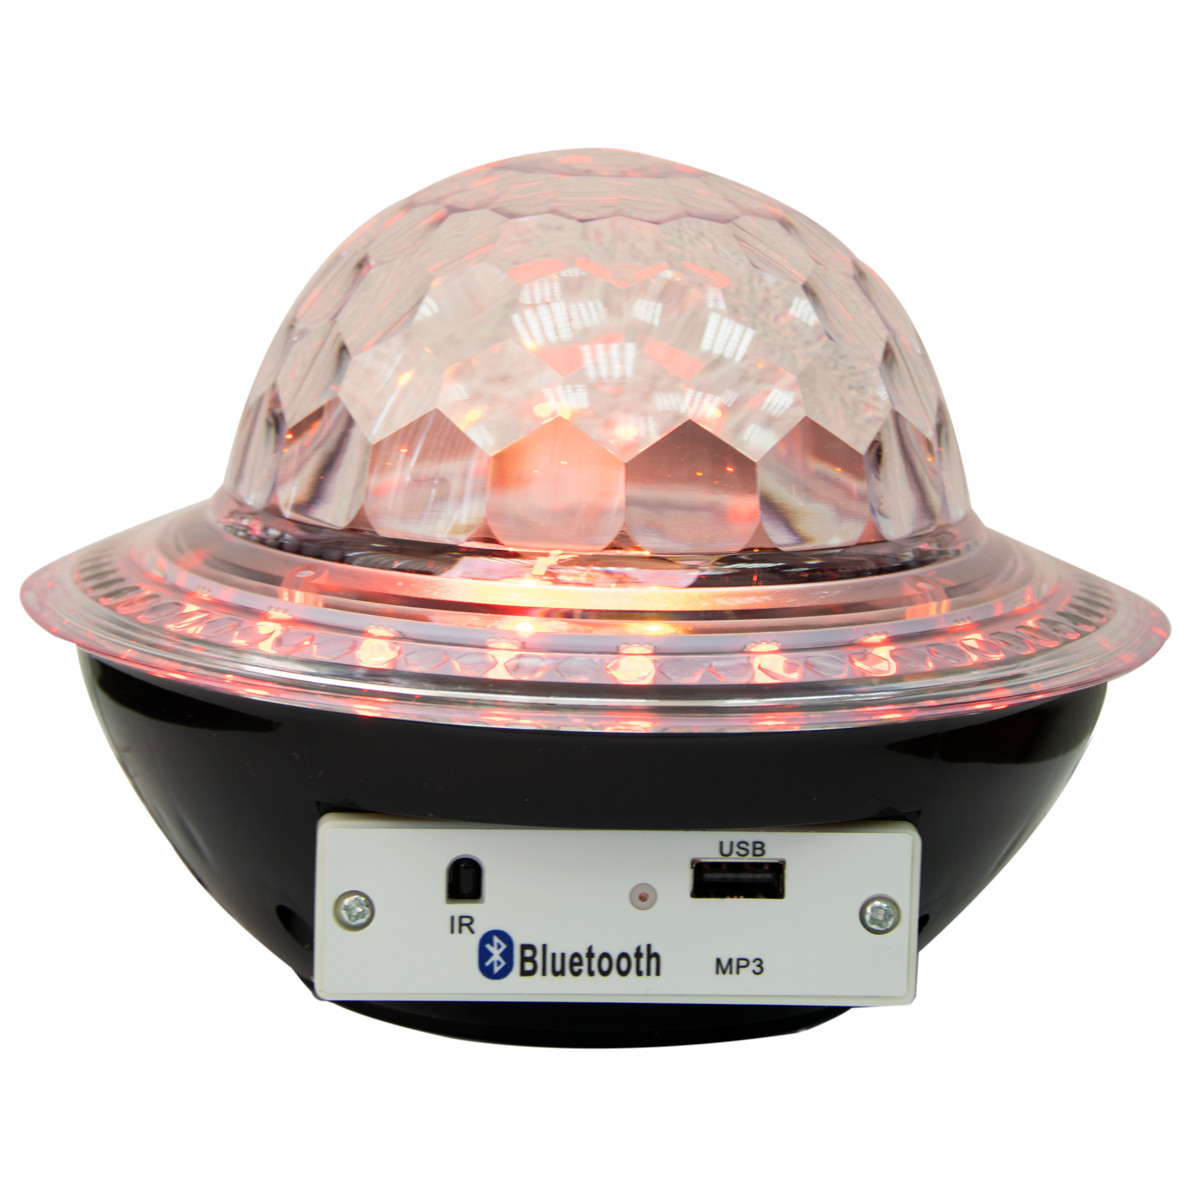 Музична диско куля Ufo crystal magic ball - Чорна, шар світломузика з блютузом, led діскошар (дискошар)